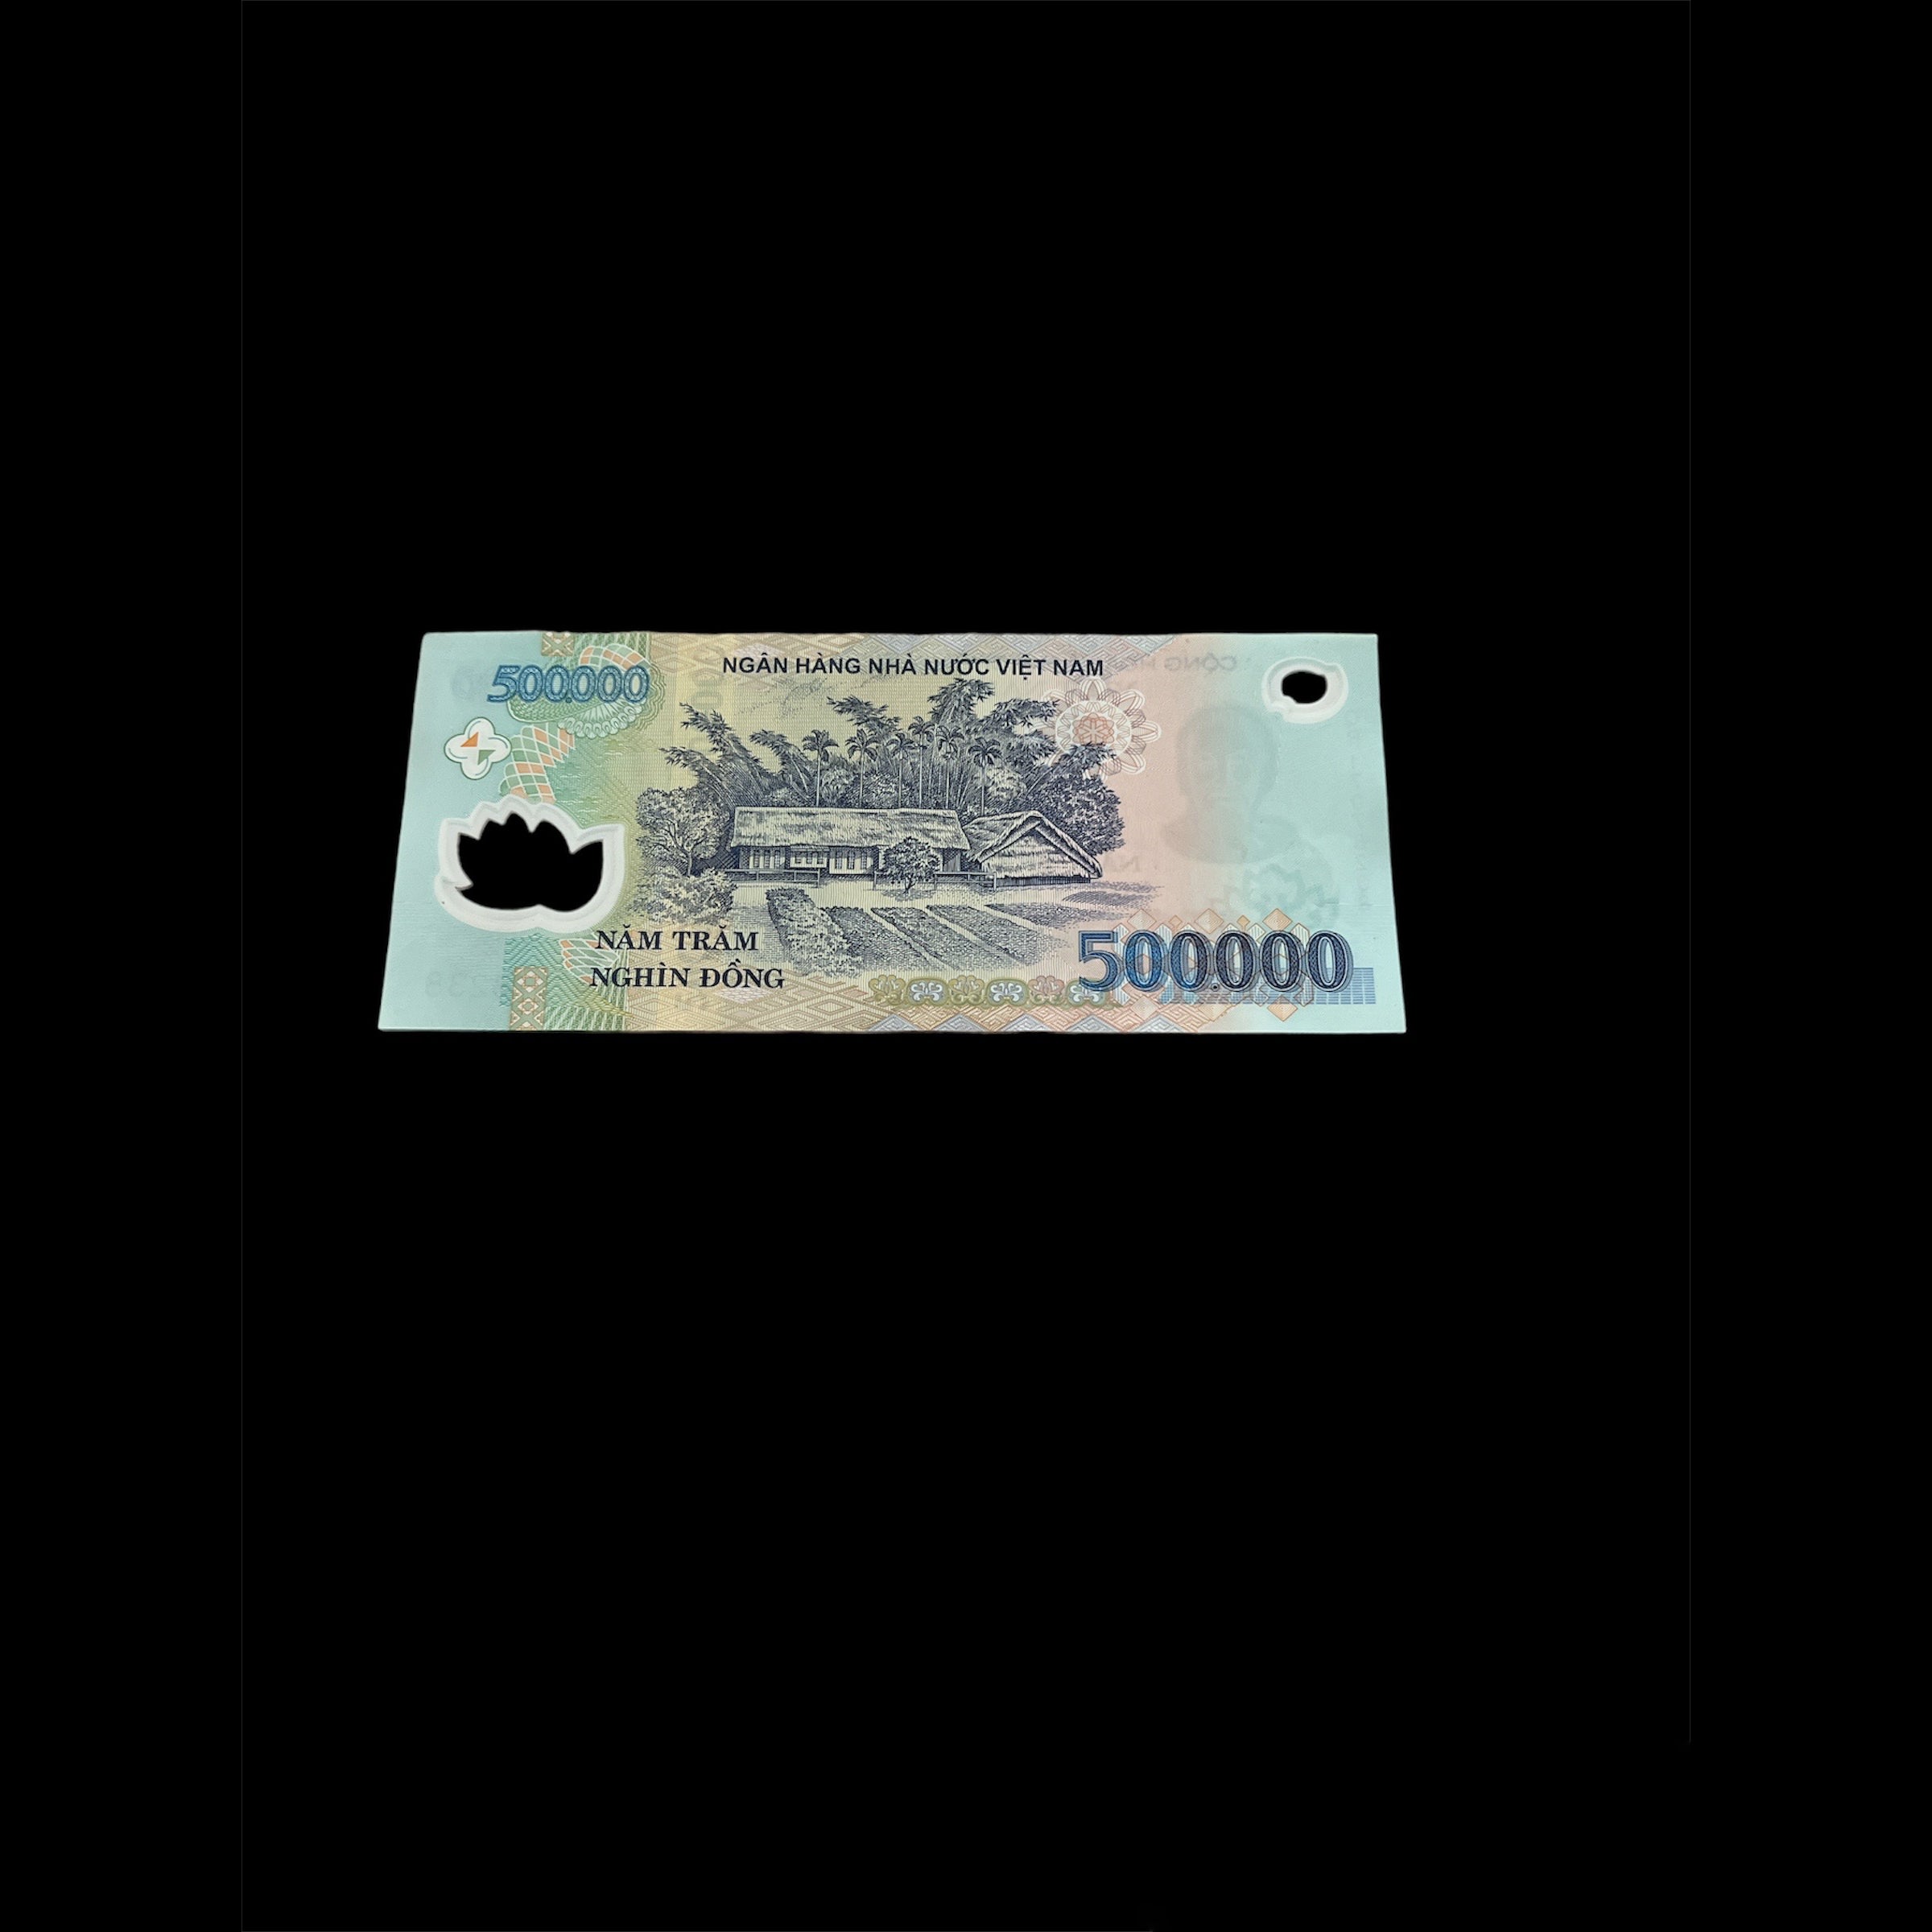 Vietnamese Dong Banknote-500,000 Vnd Vietnam